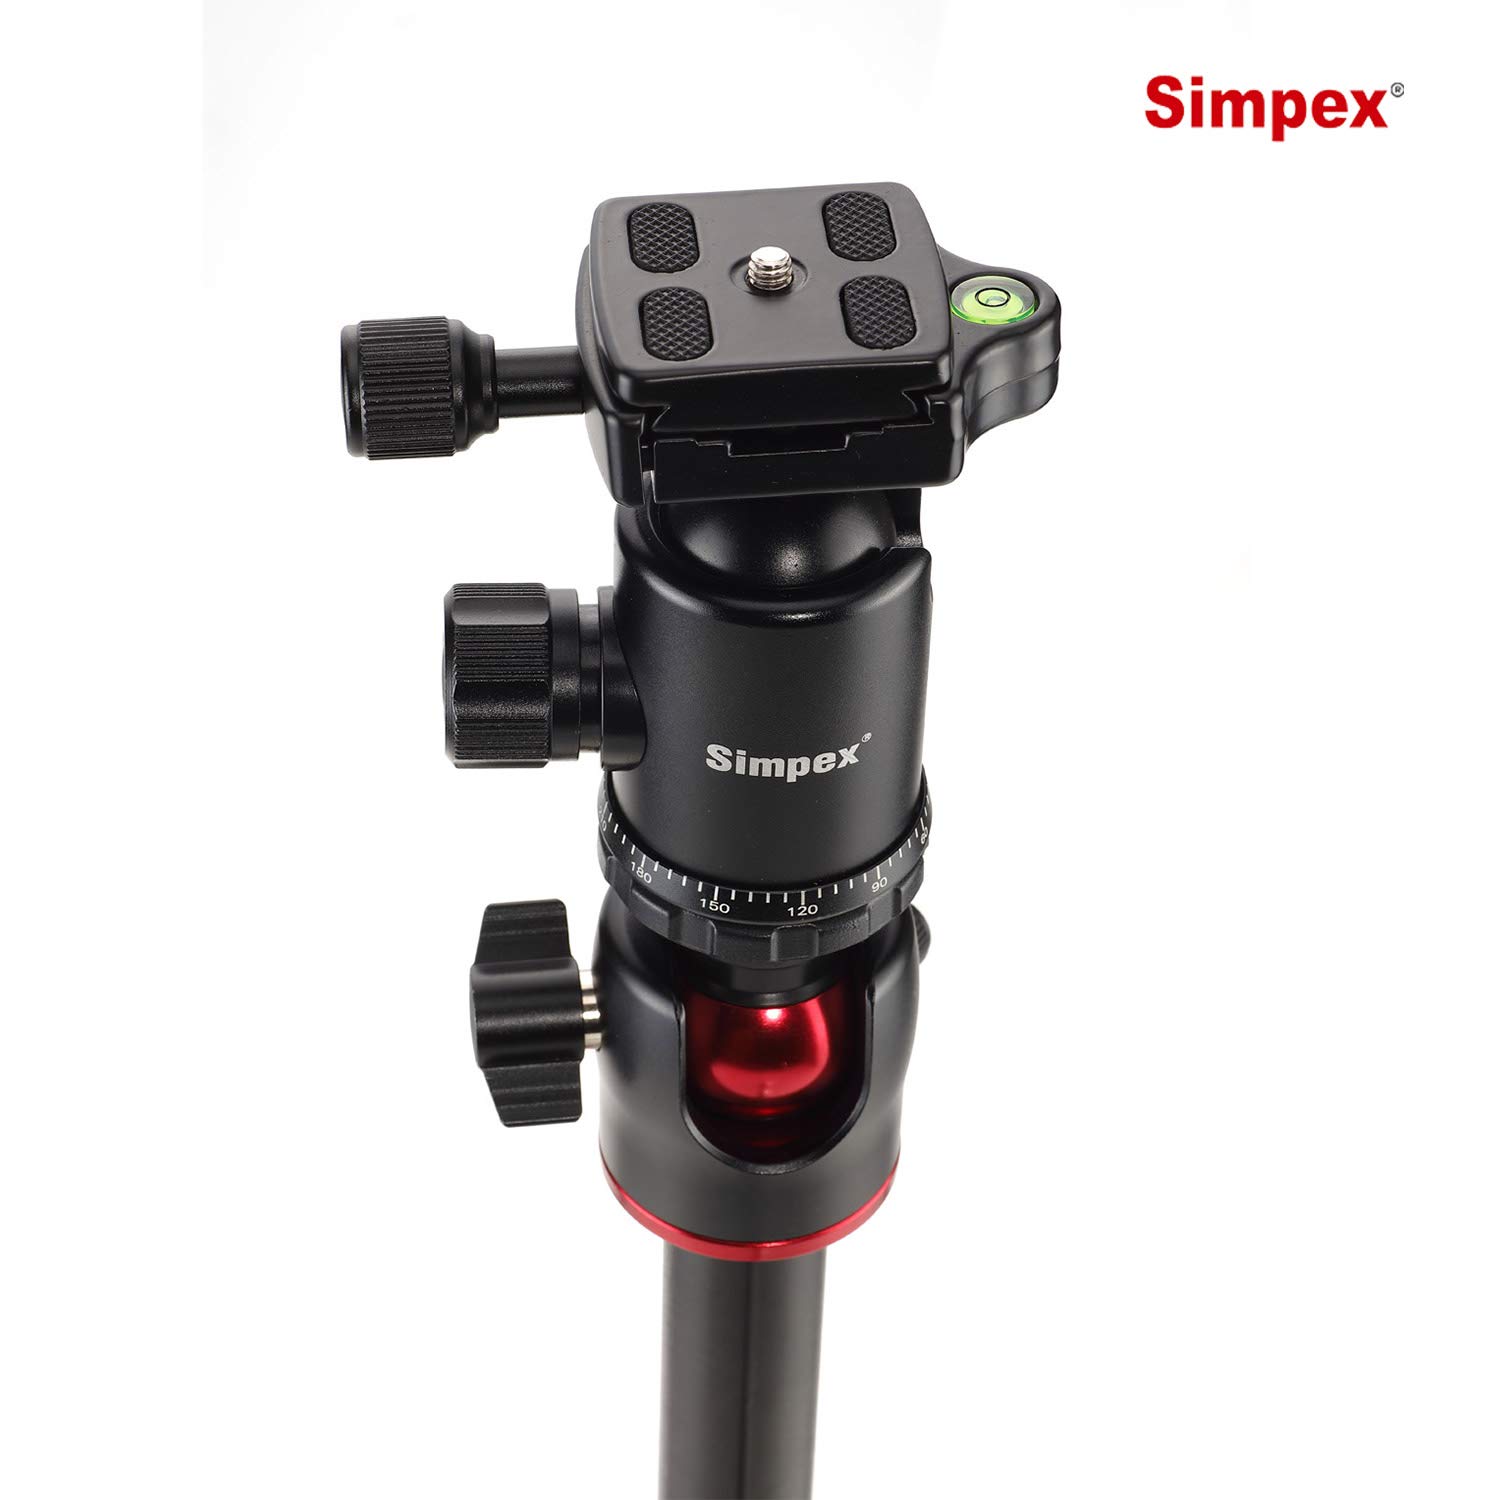 Simpex Professional Aluminium Tripod 540-TM Tripod Cum Monopod with Multipurpose Head for Low Level Shooting, Panning for All DSLR Camera